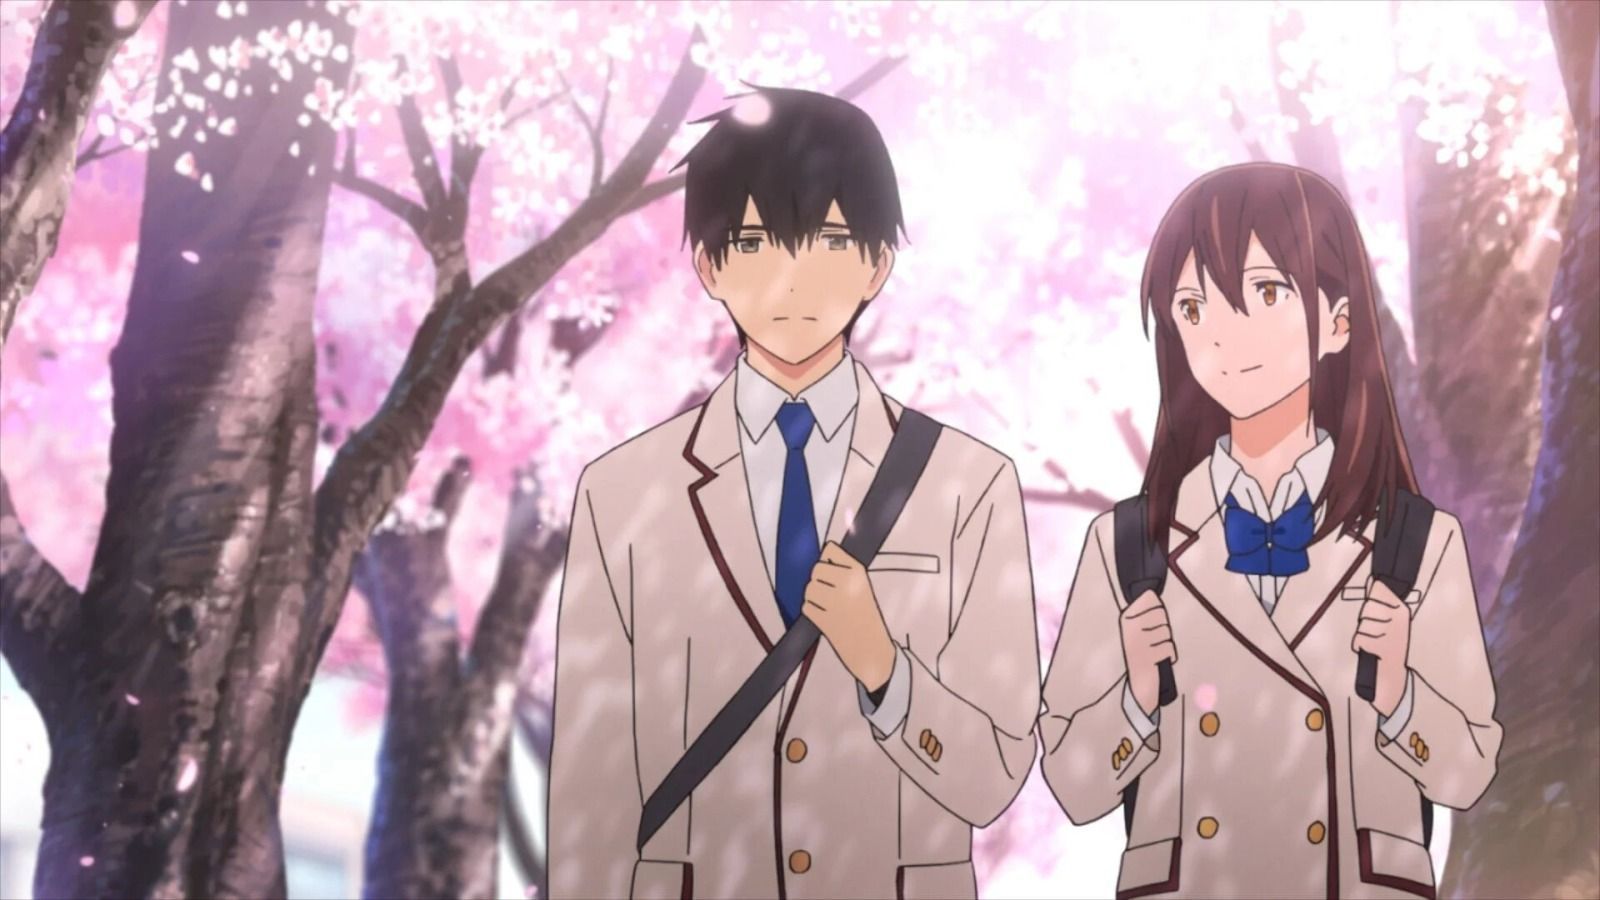 Sakura and Haruki In I Want To Eat Your Pancreas (image via Studio VOLN)